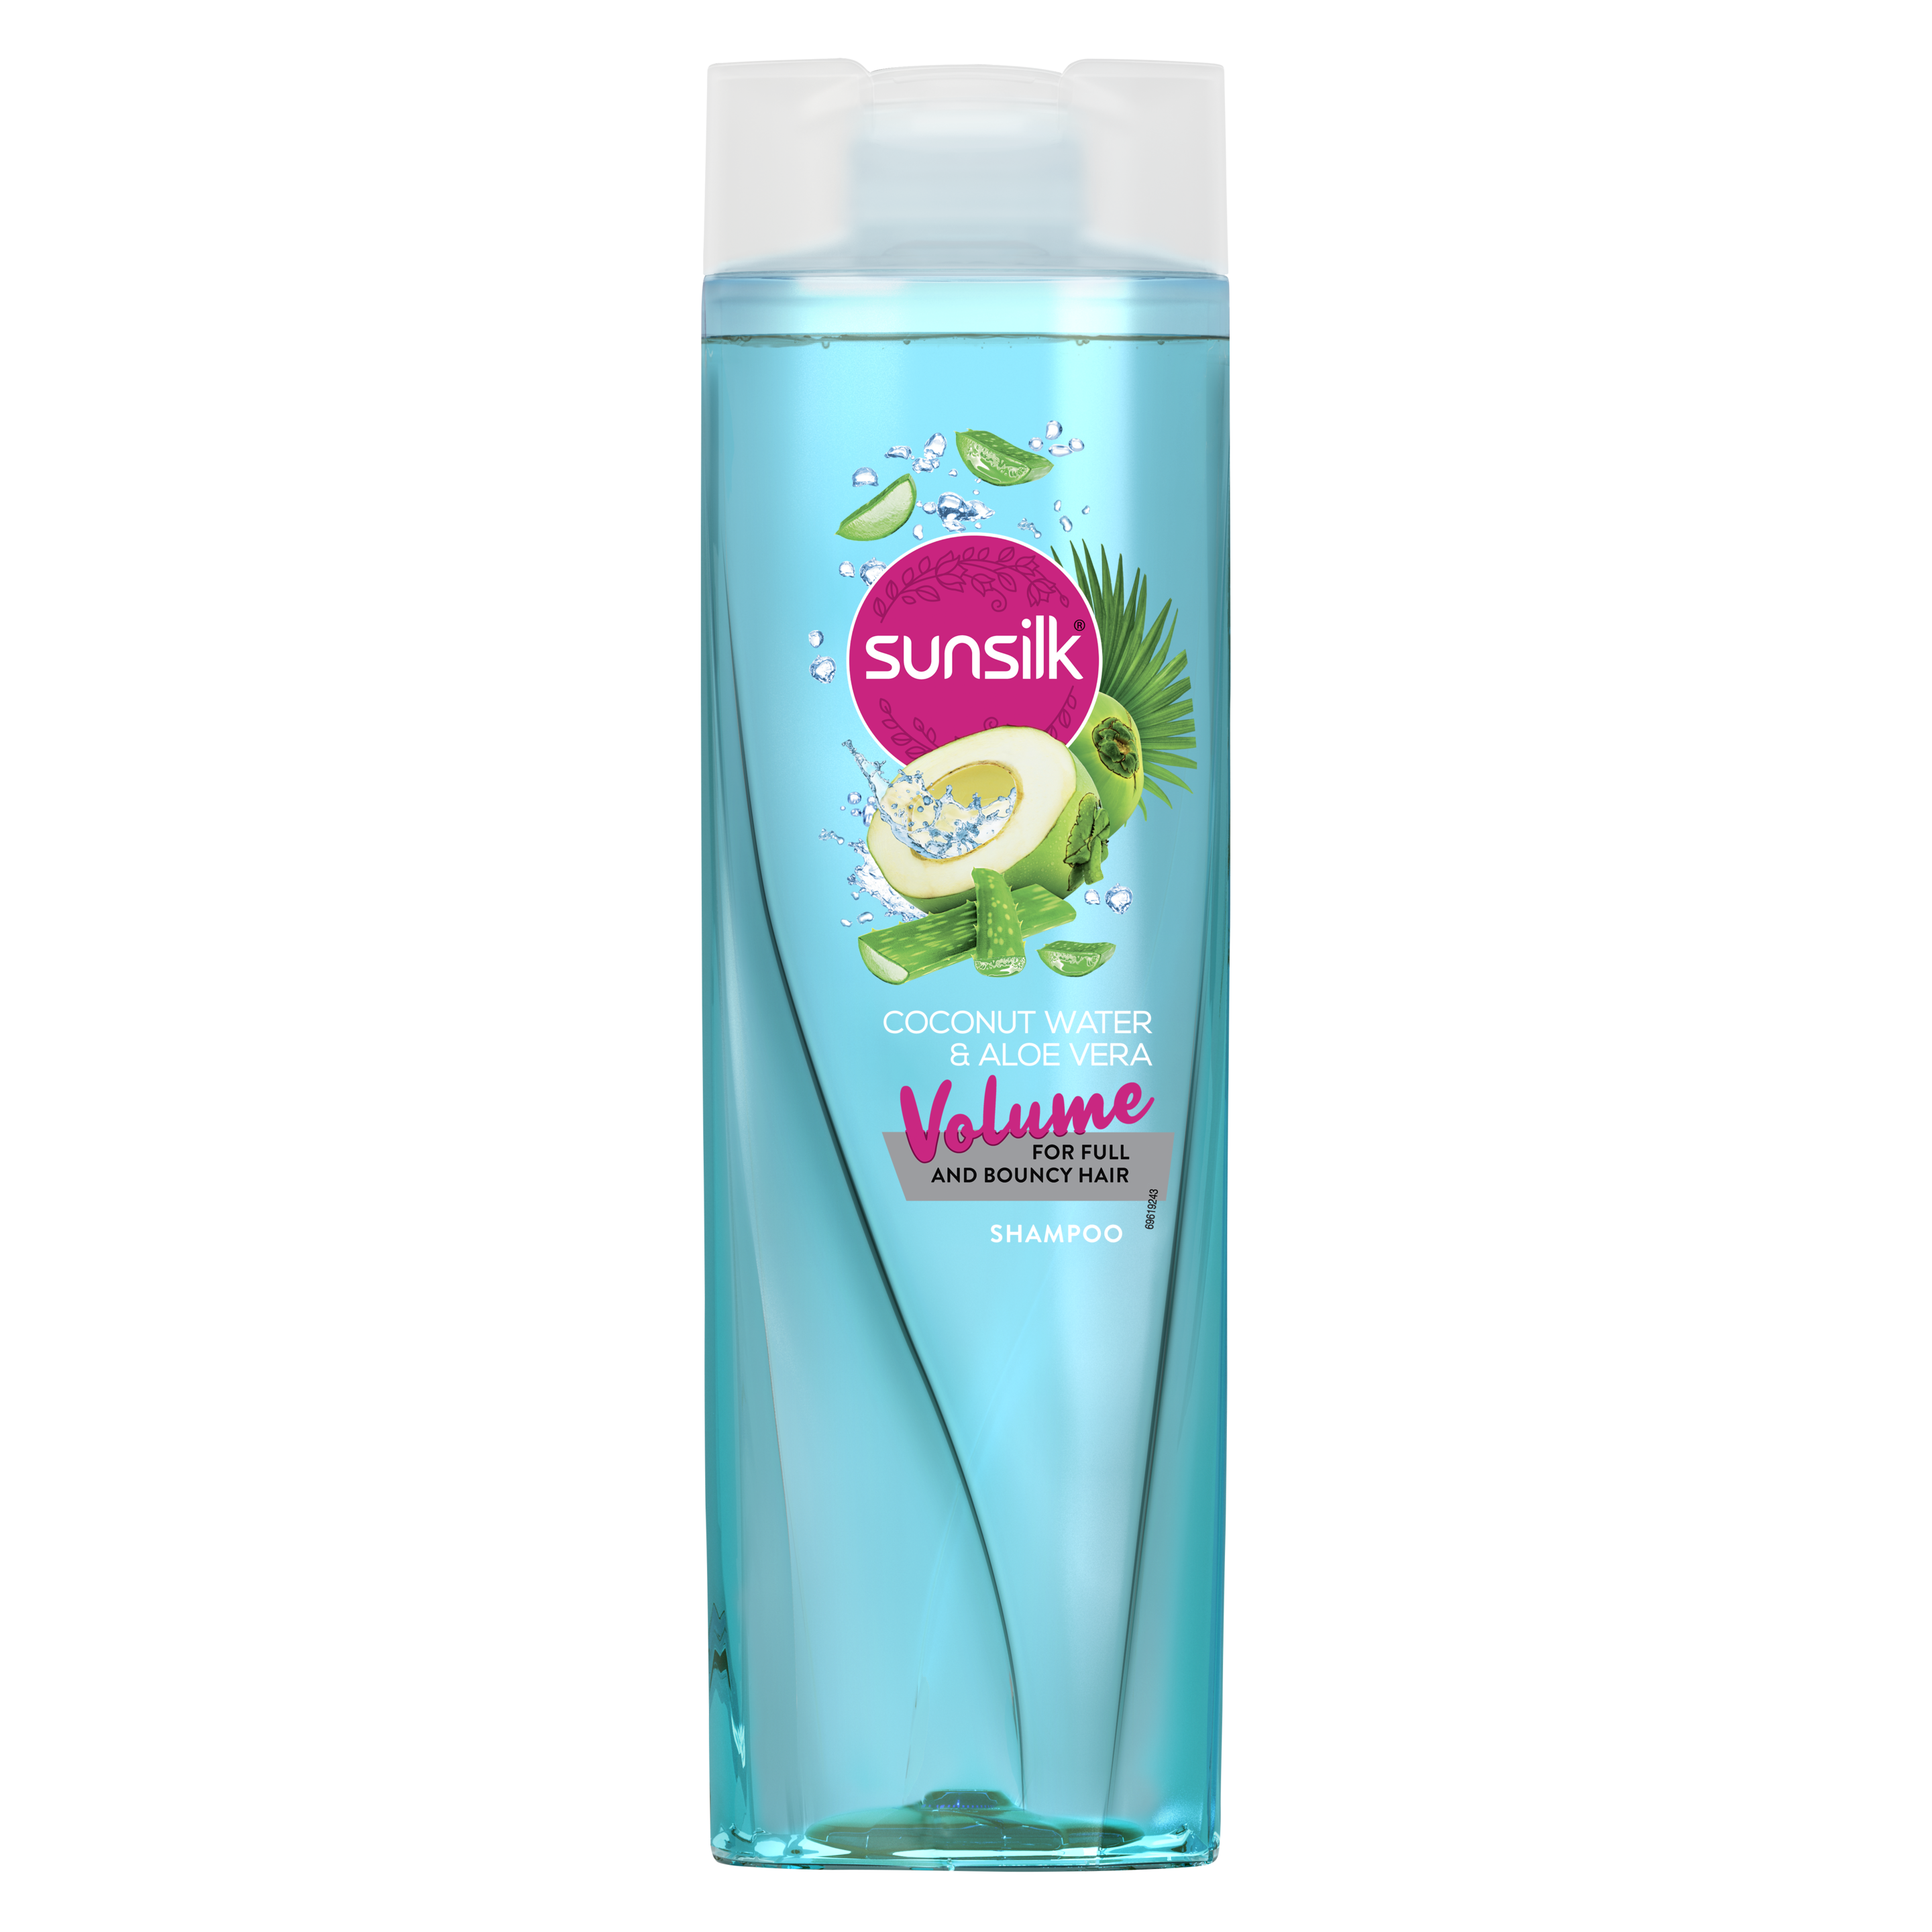 Sunsilk Coconut Water & Aloe Vera Volume Shampoo